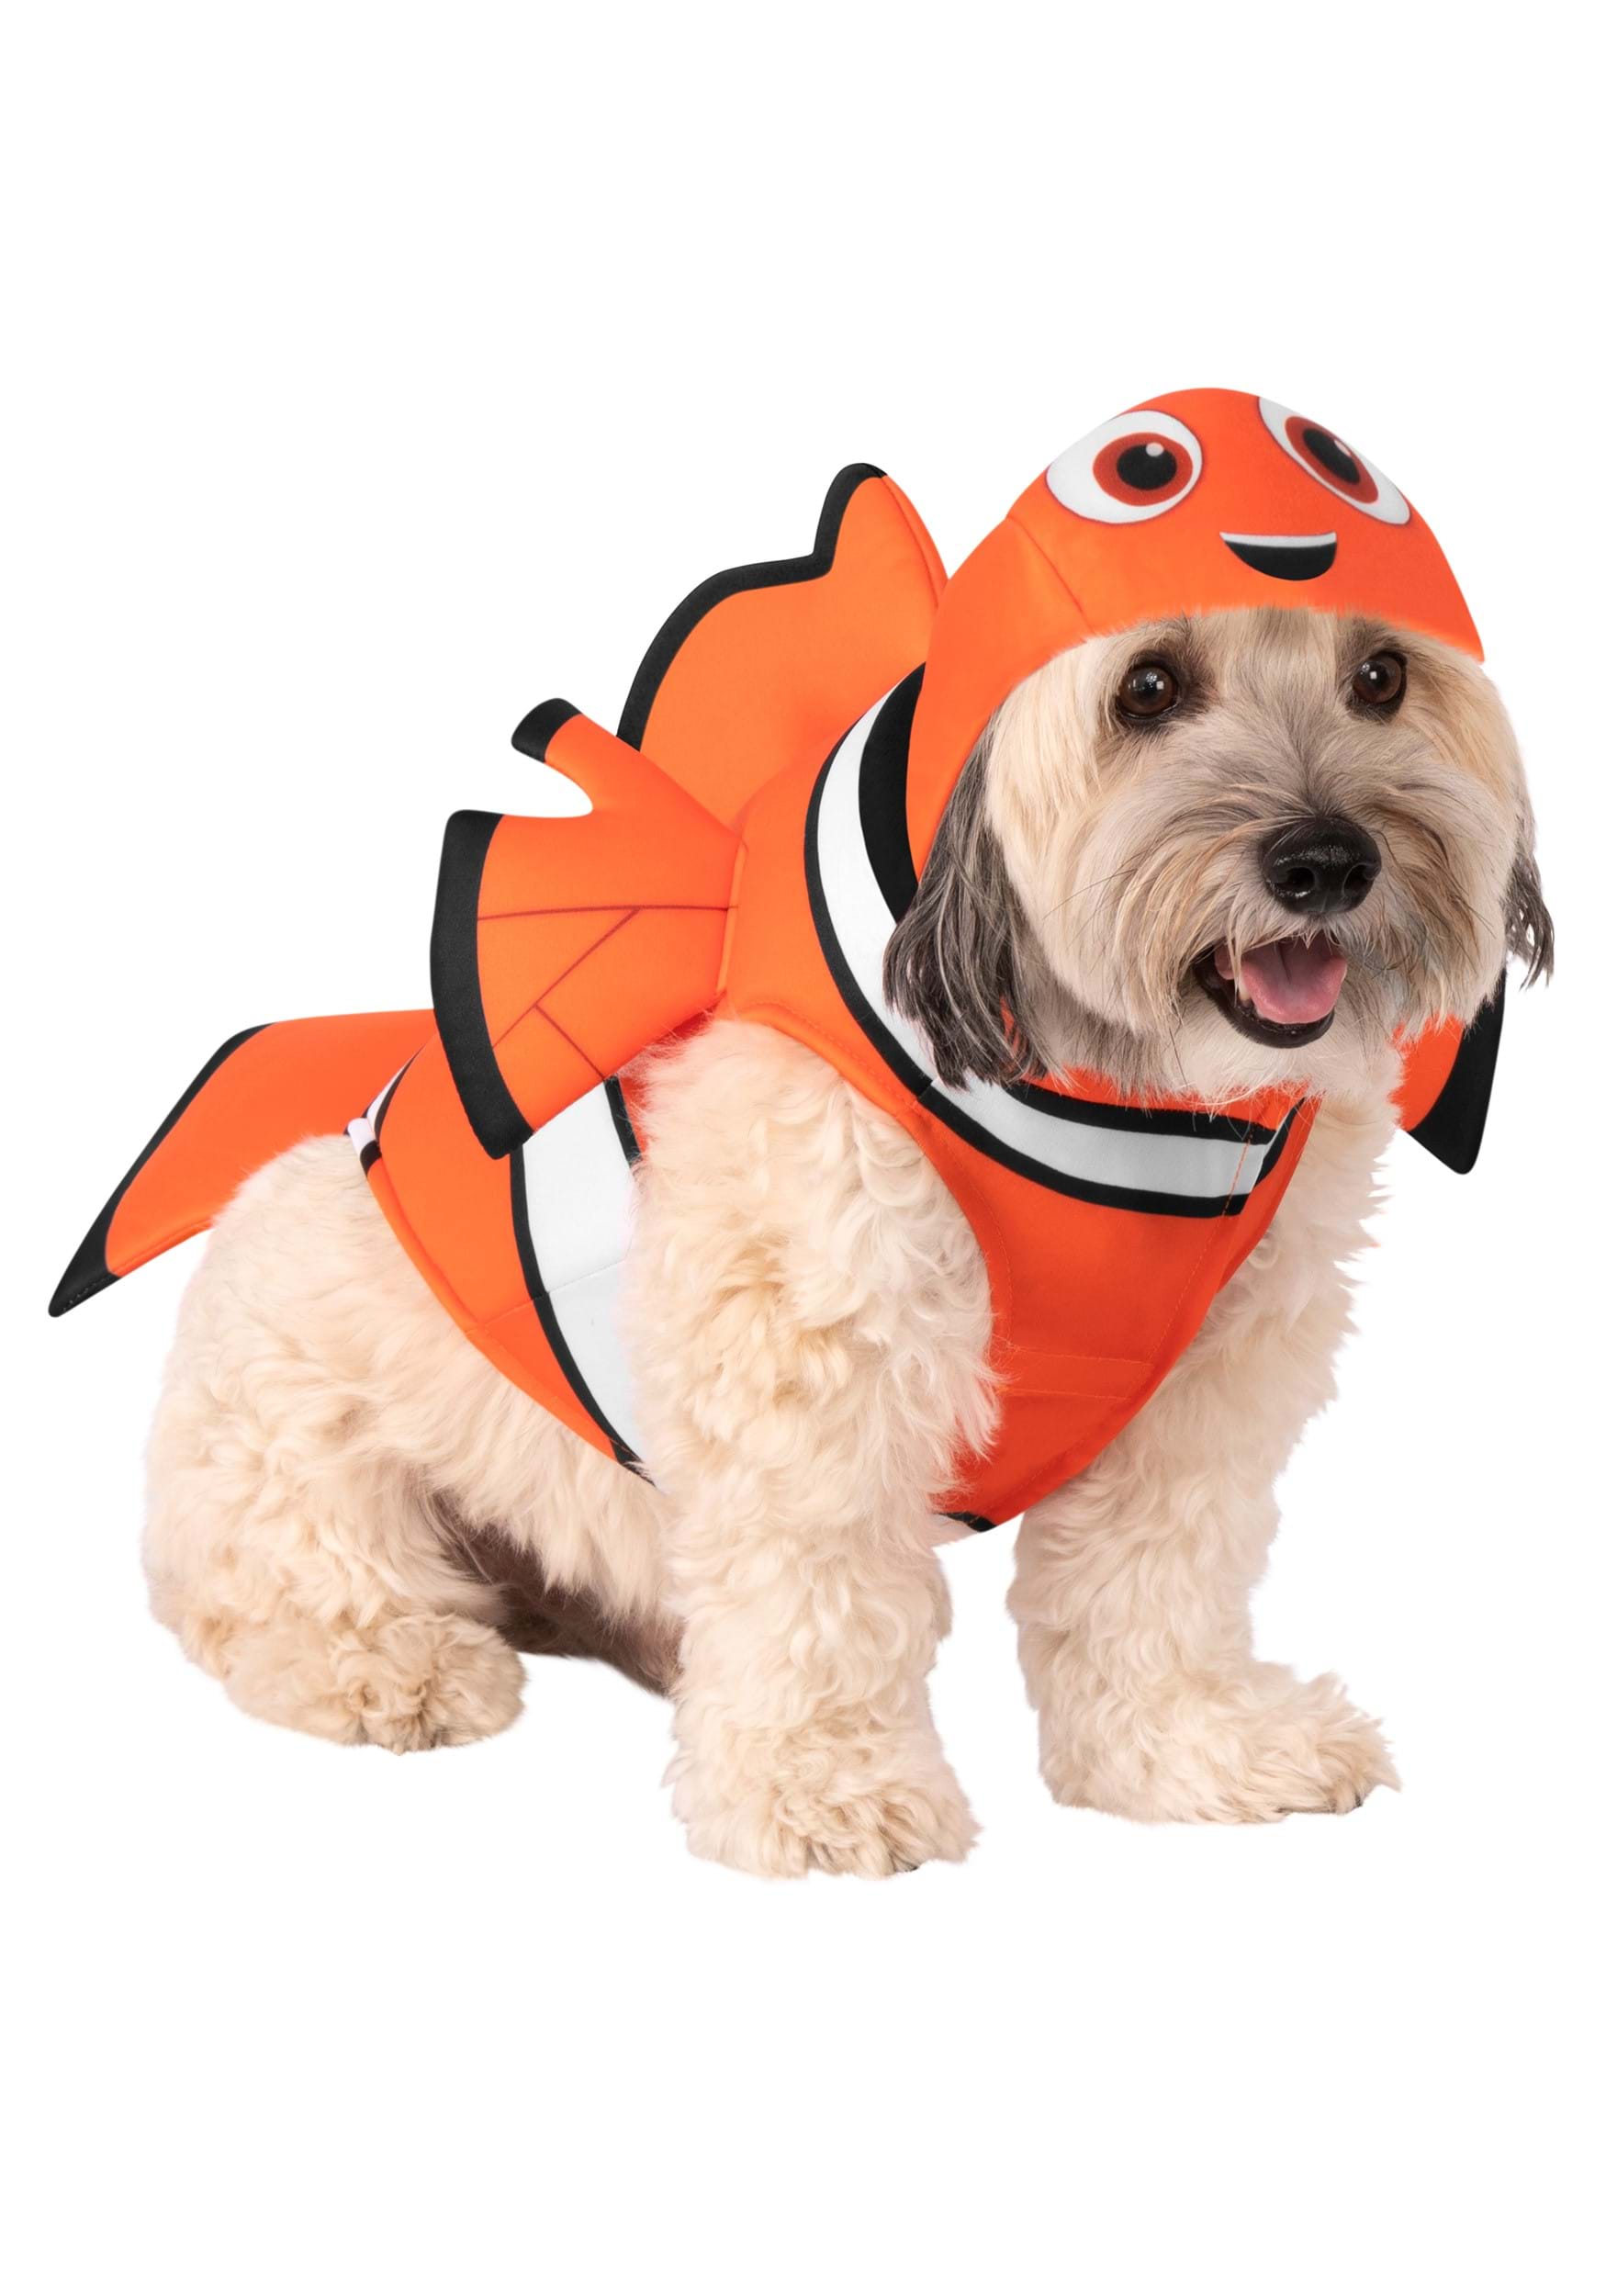 Finding Nemo Nemo Costume for Pets